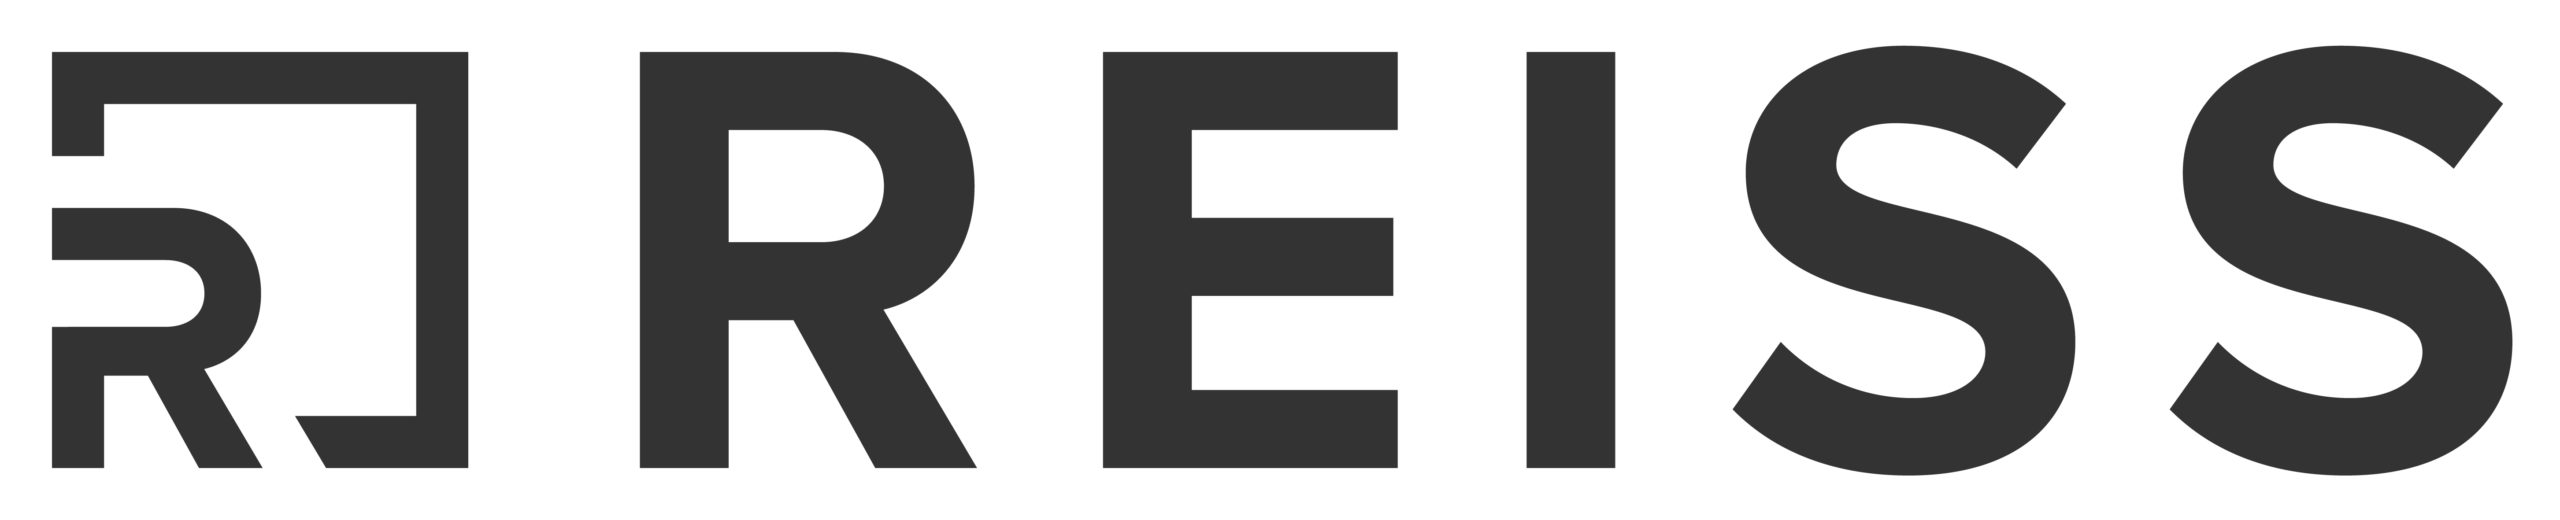 https://www.duennebeil.com/wp-content/uploads/2020/10/reiss-logo-scaled.jpg